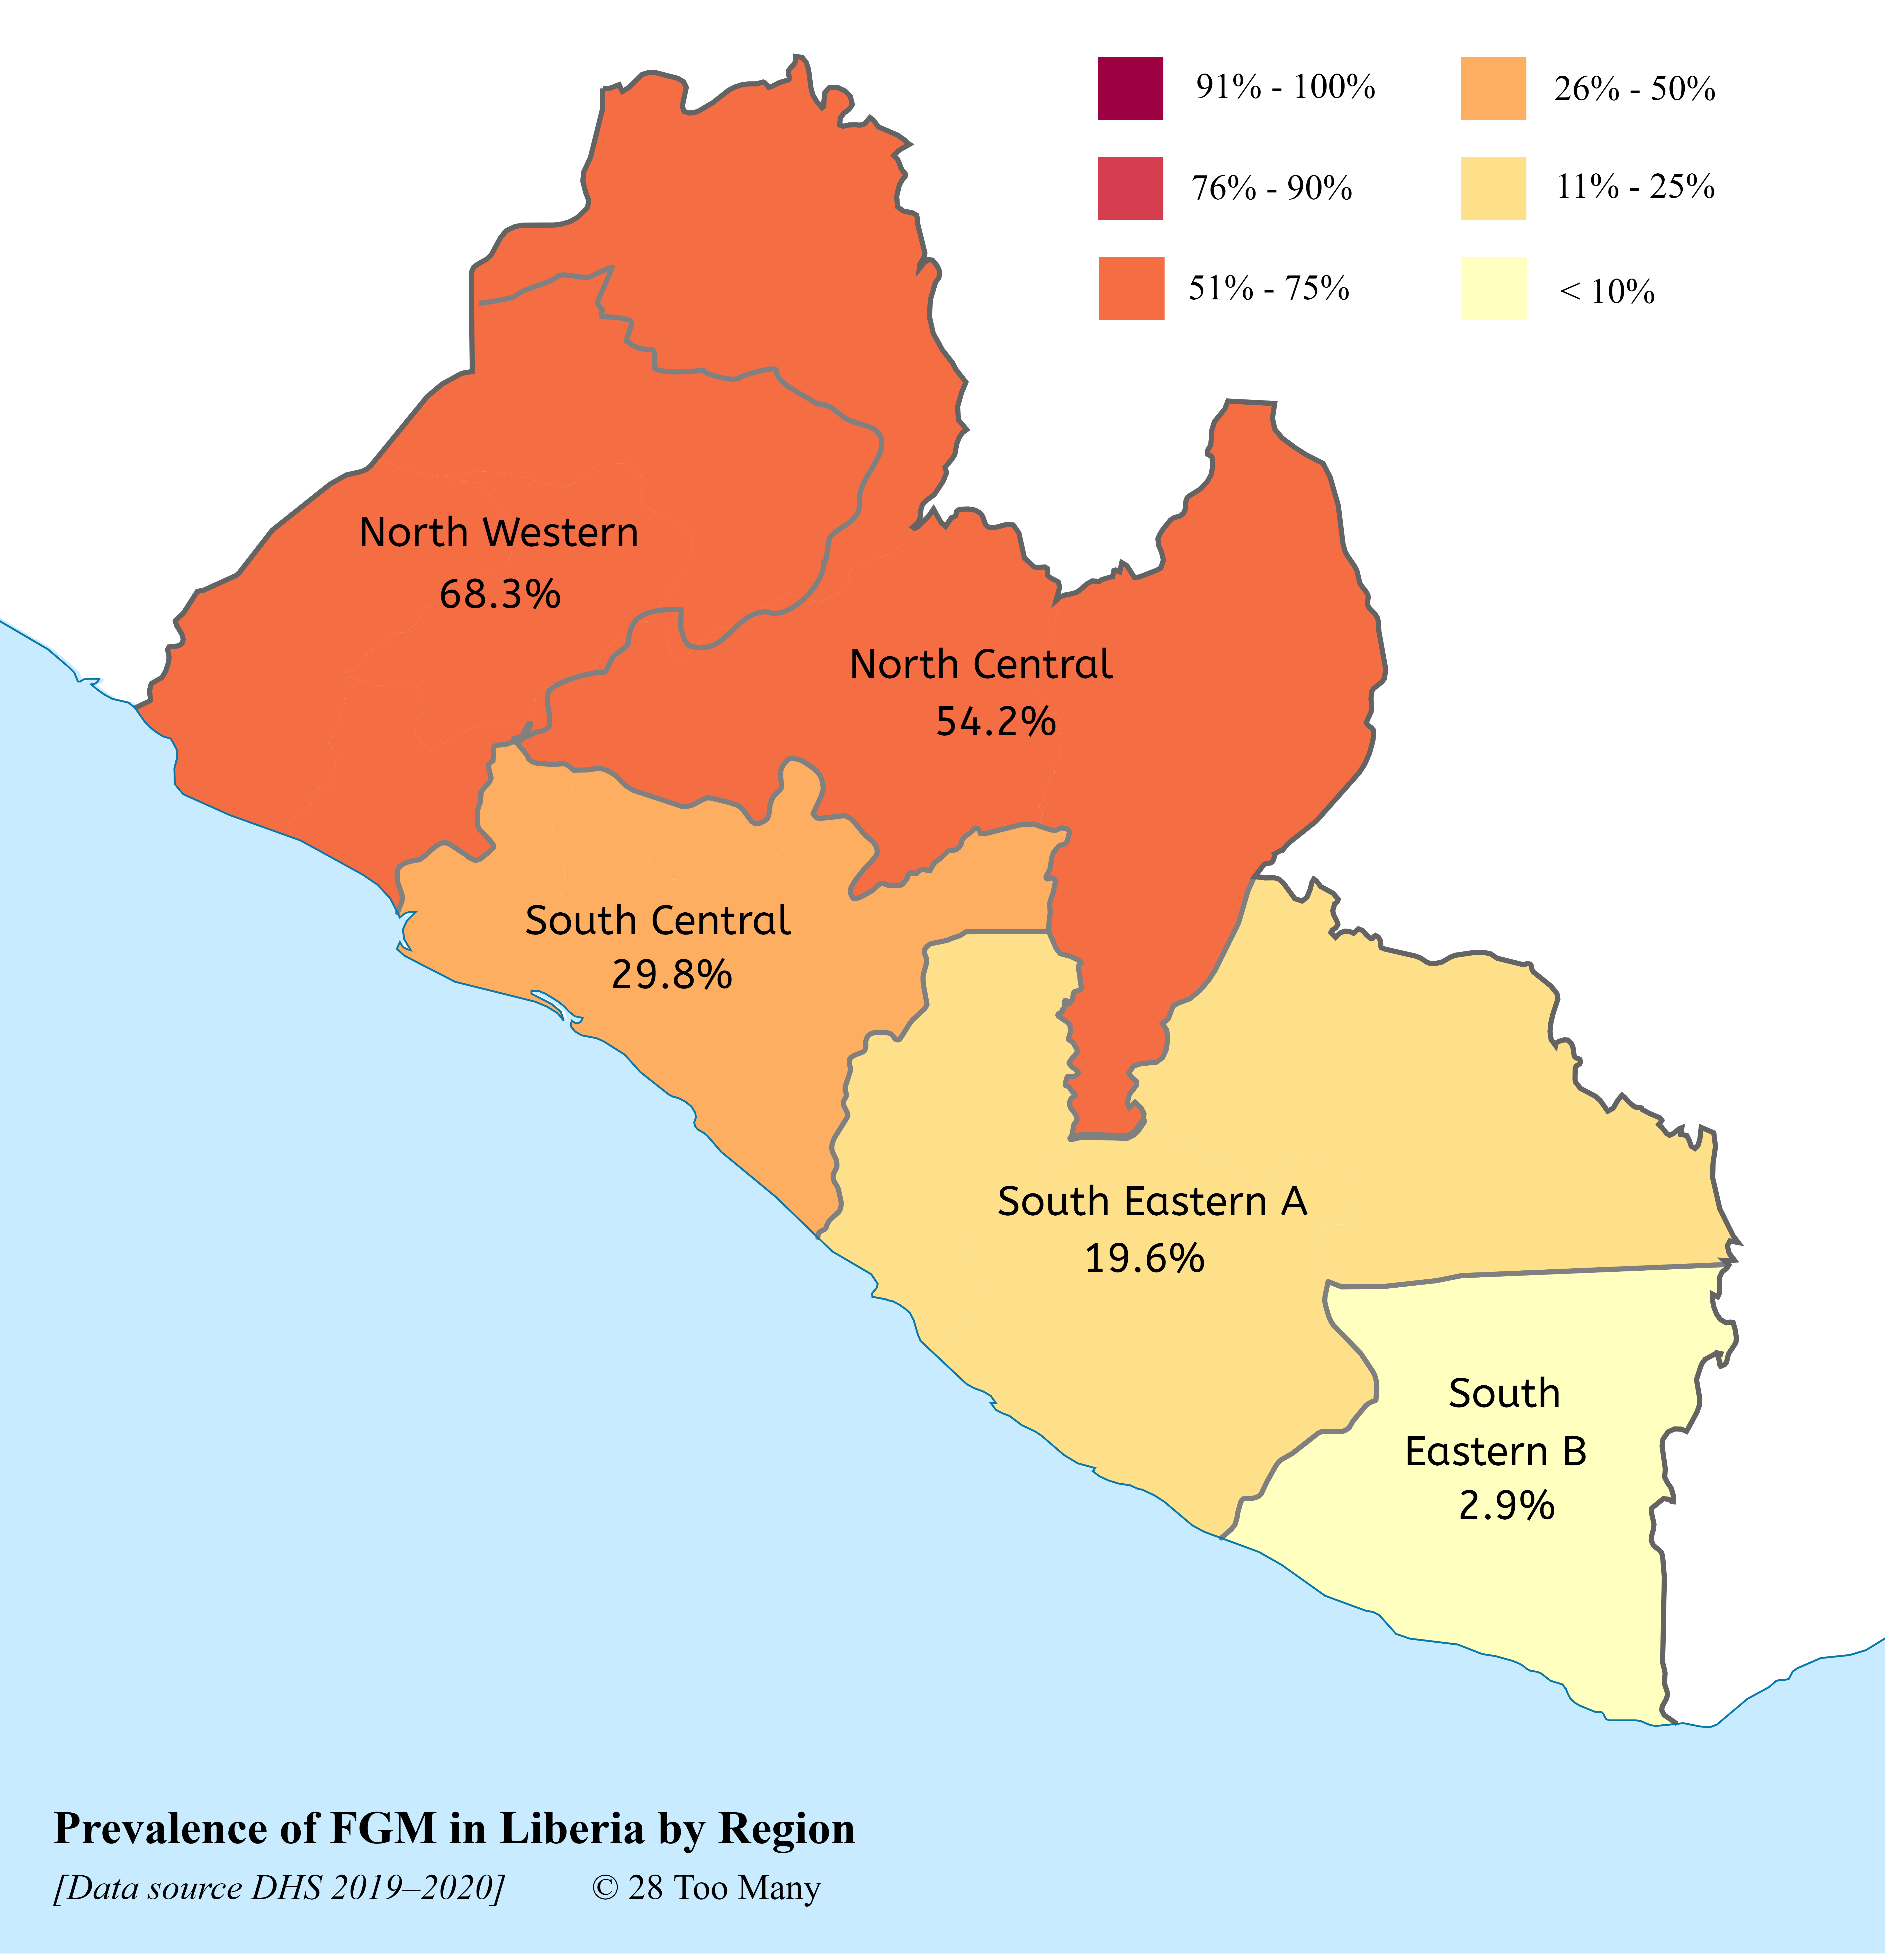 Distribution of FGM/C across Liberia